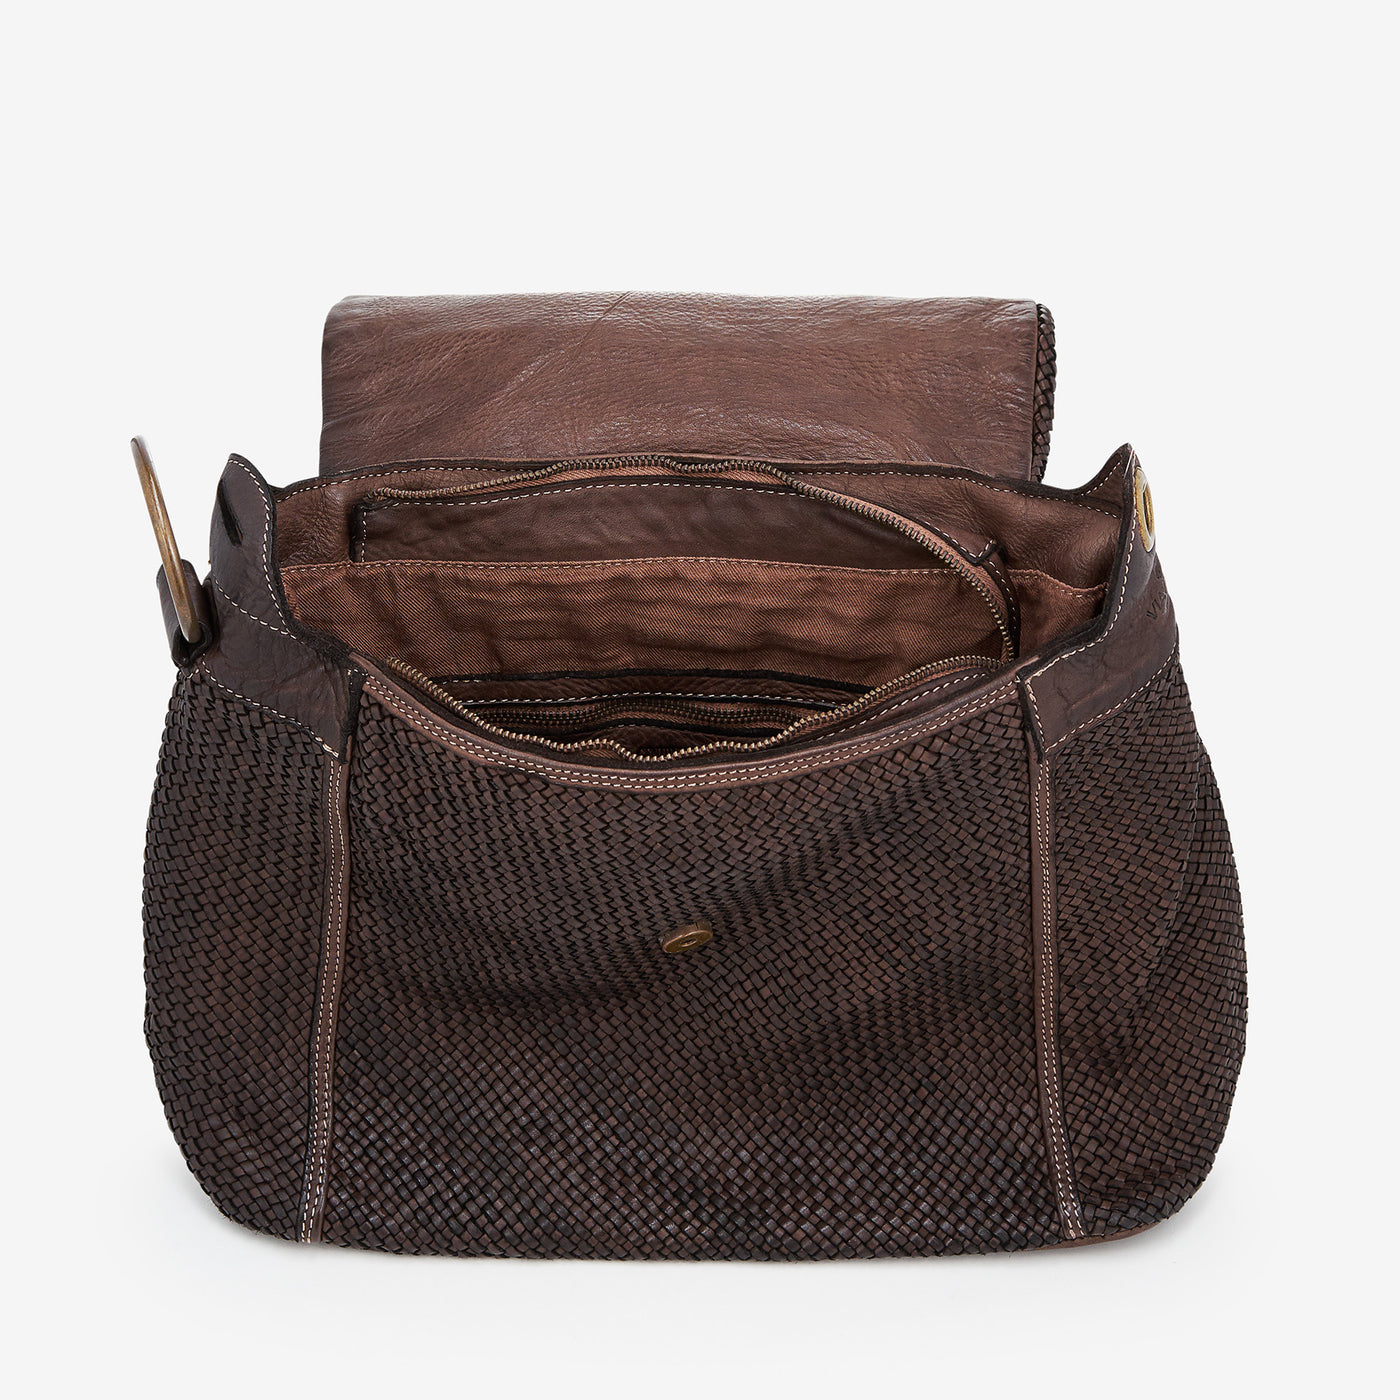 VIAVERDI Dark Brown Intrecciato Leather Shoulder Bag Made in Italy 